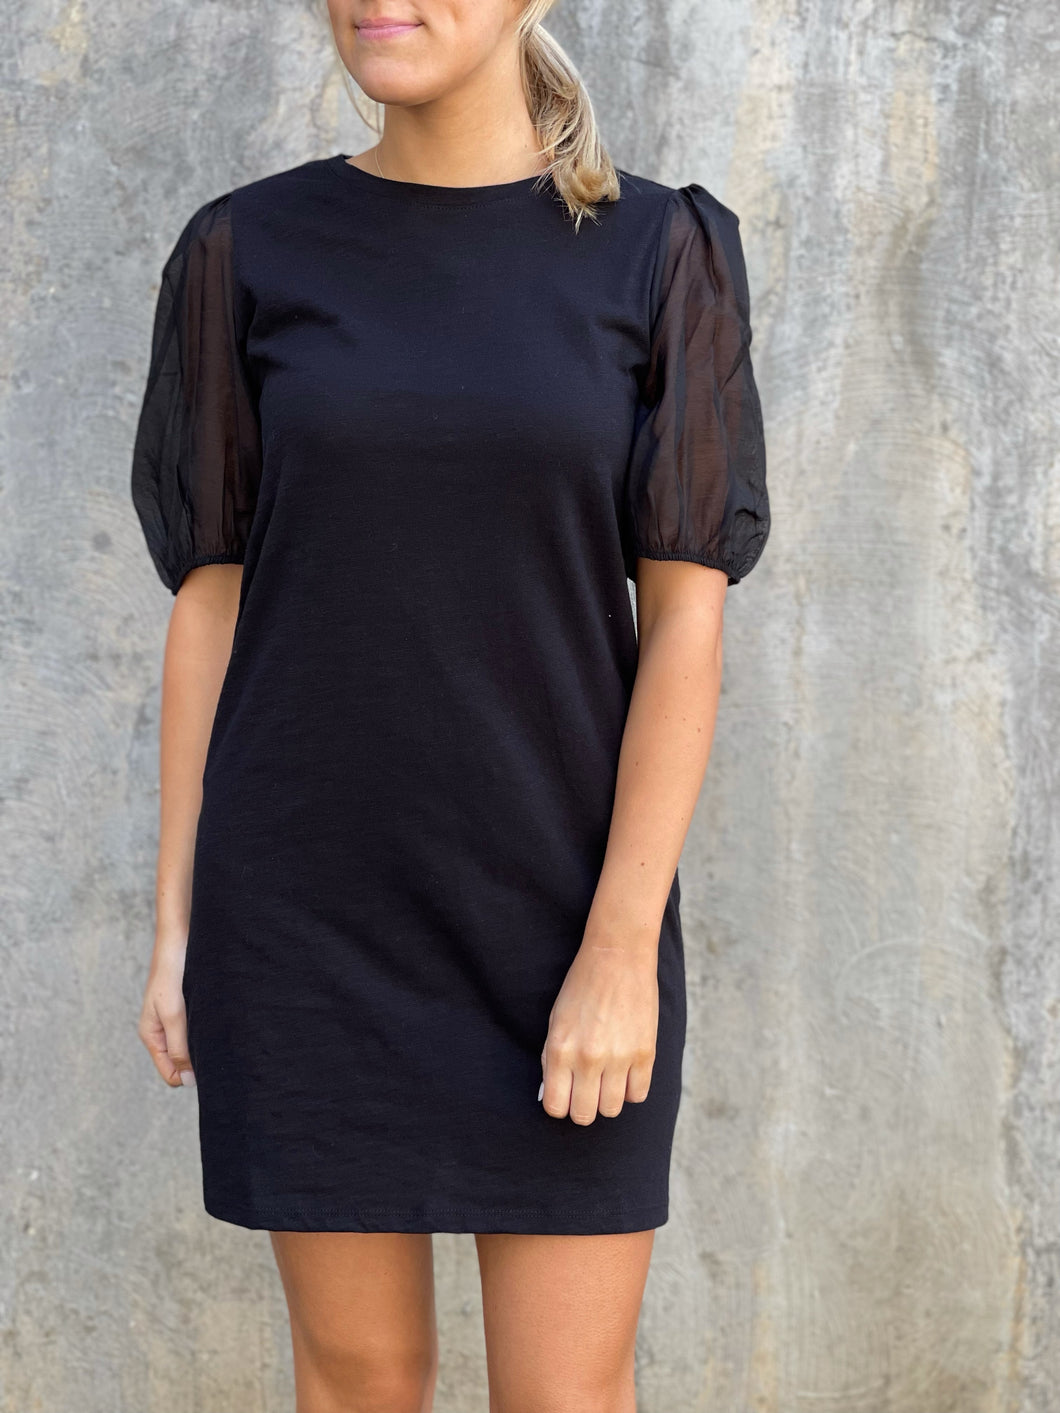 Knit Black Dress w/Sheer Sleeves